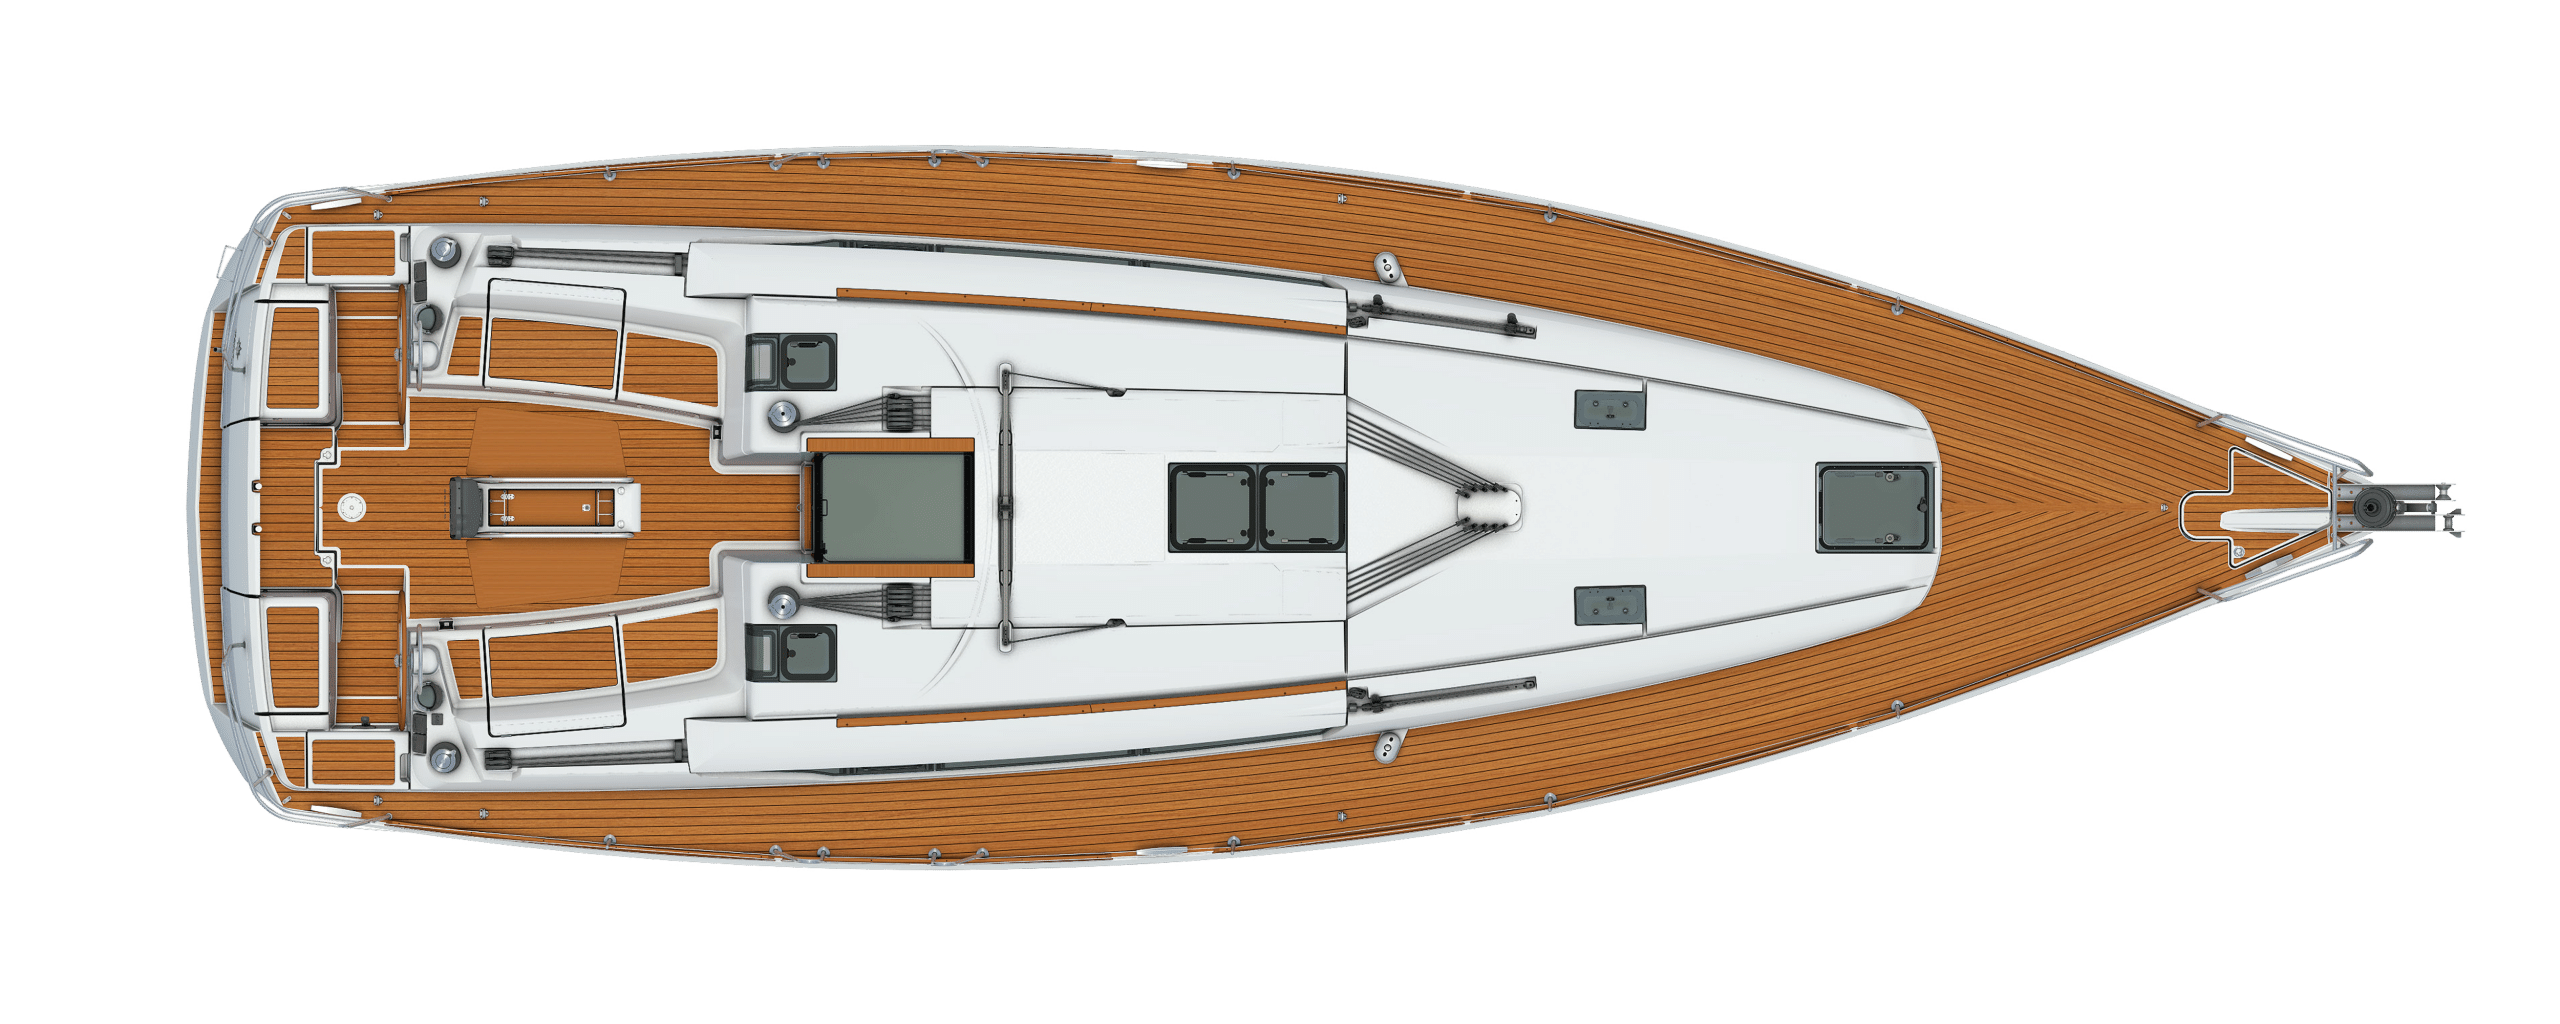 jeanneau-sun-odyssey-449-layout-deck